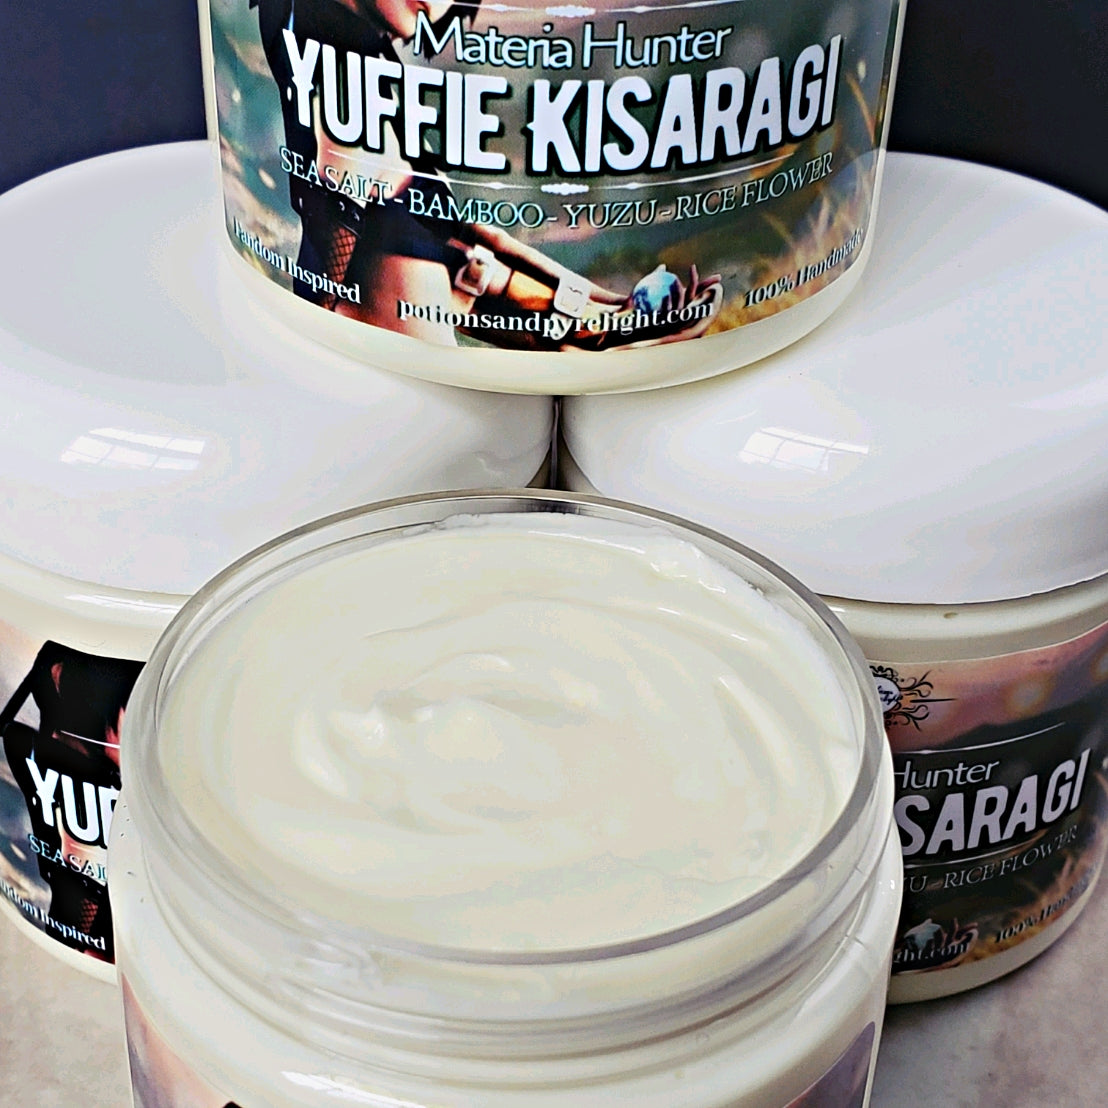 Yuffie Kisaragi Anytime Cream - Potions & Pyrelight